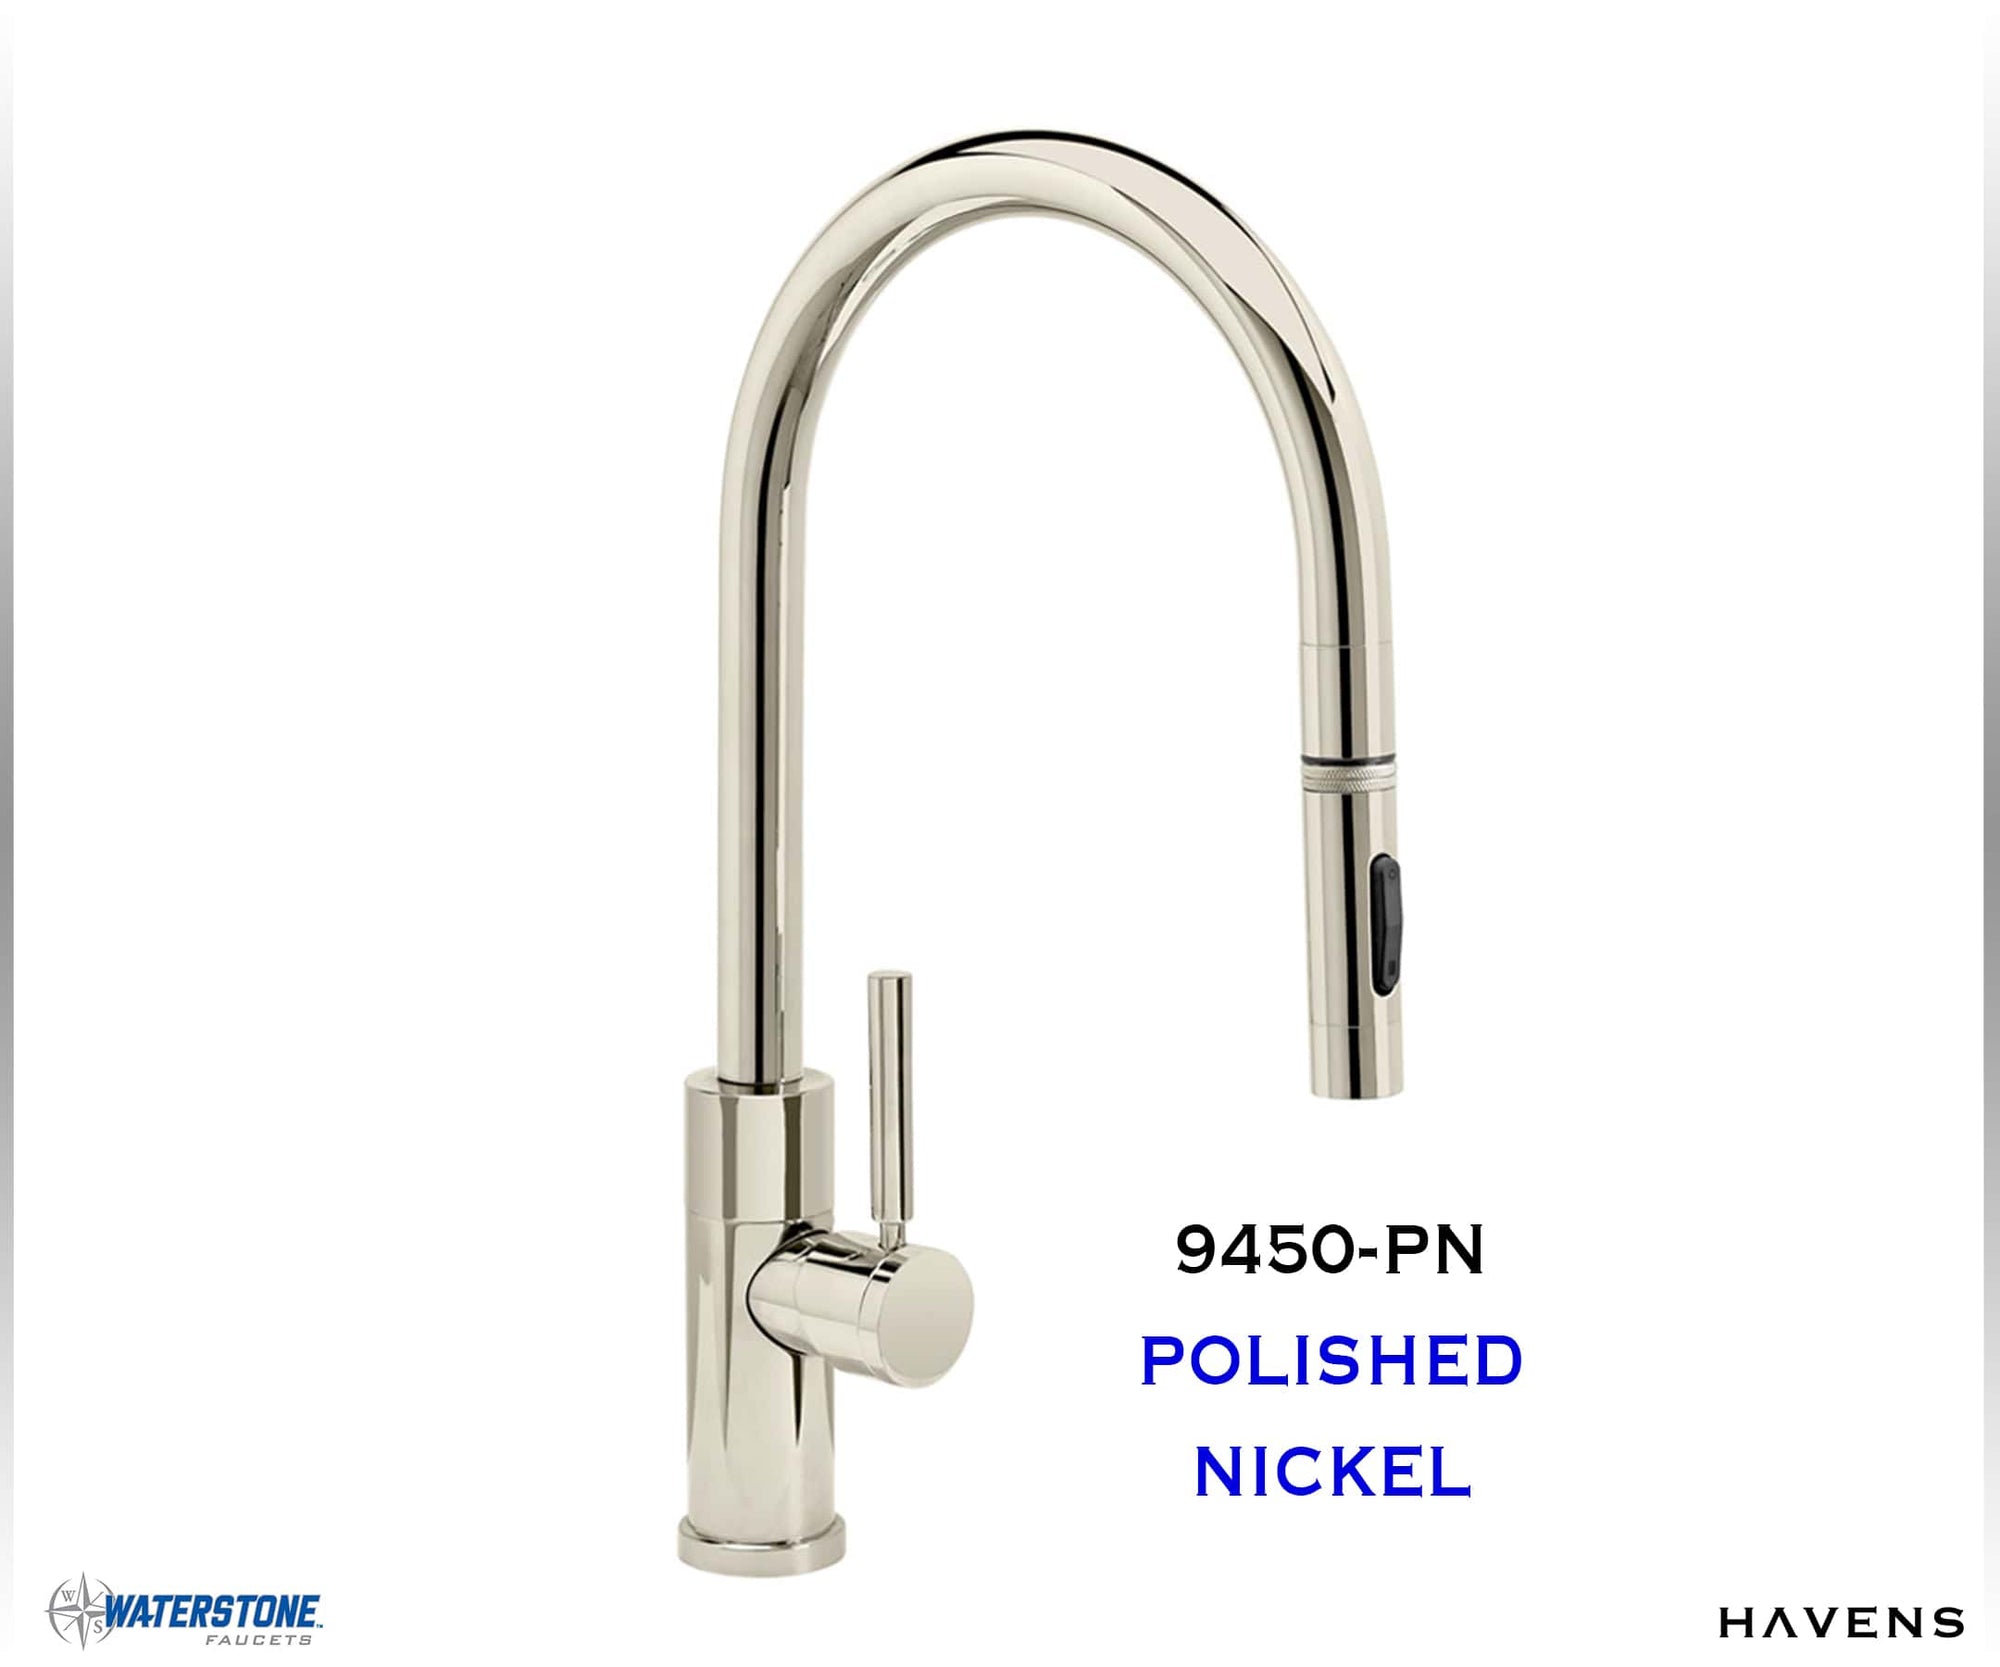 Waterstone Modern PLP Pulldown Faucet - 9450